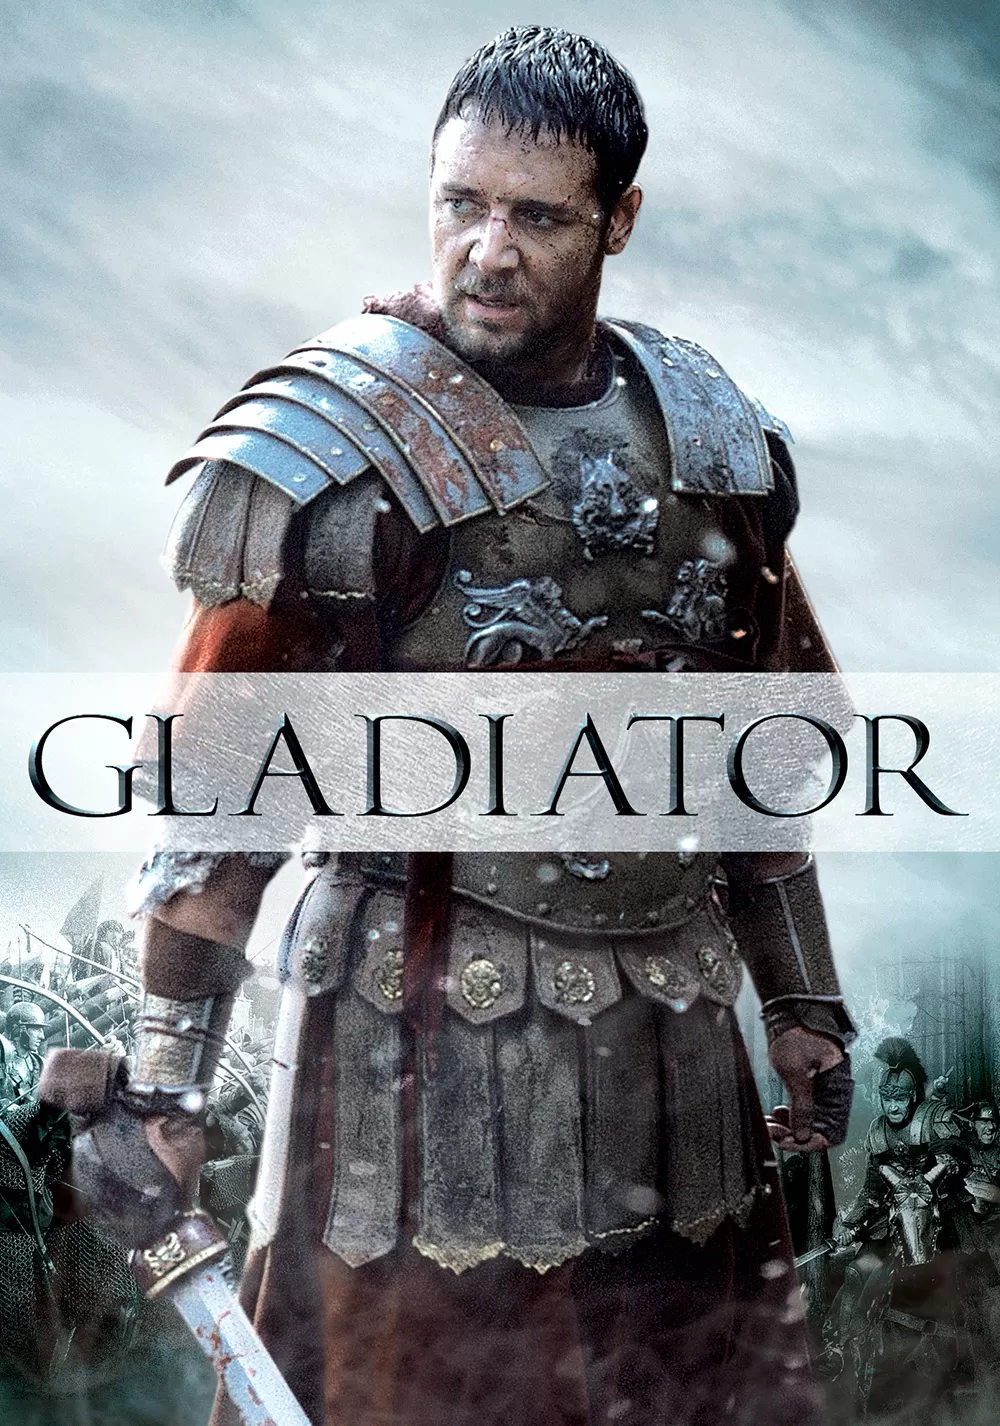 Gladiator นักรบผู้กล้า ผ่าแผ่นดินทรราช